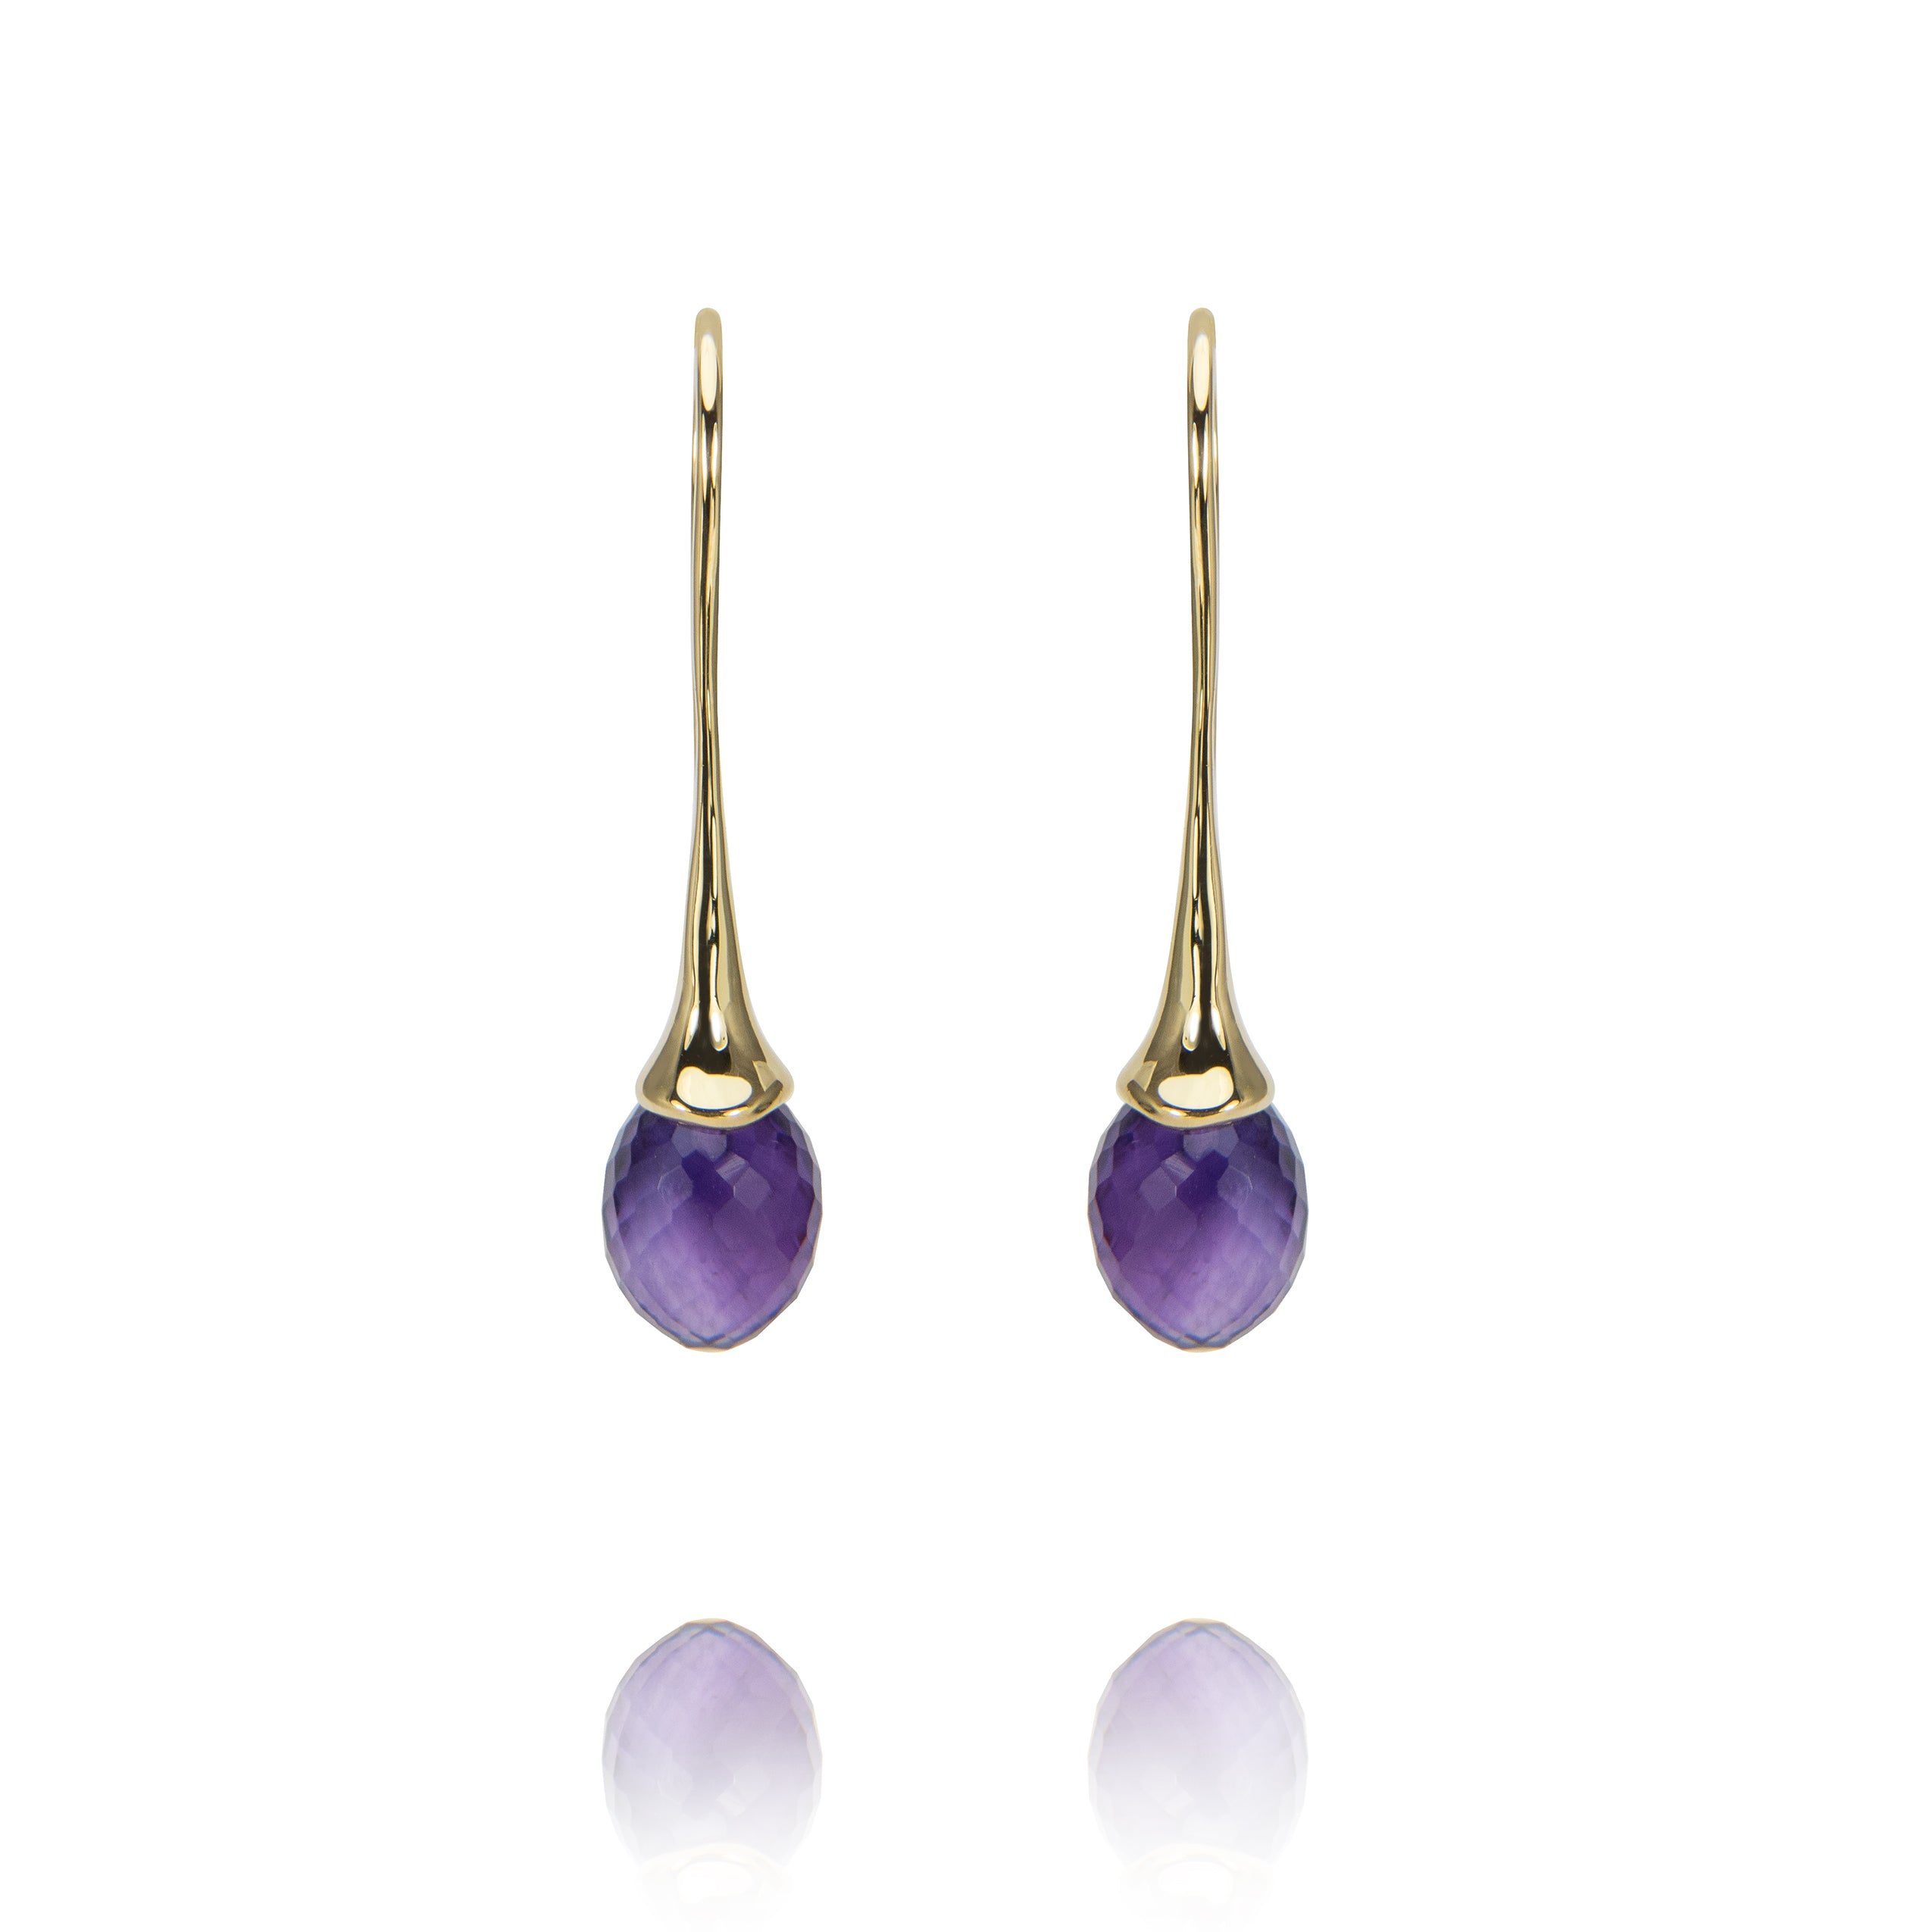 Olivia earrings "Amethyst" 925/-